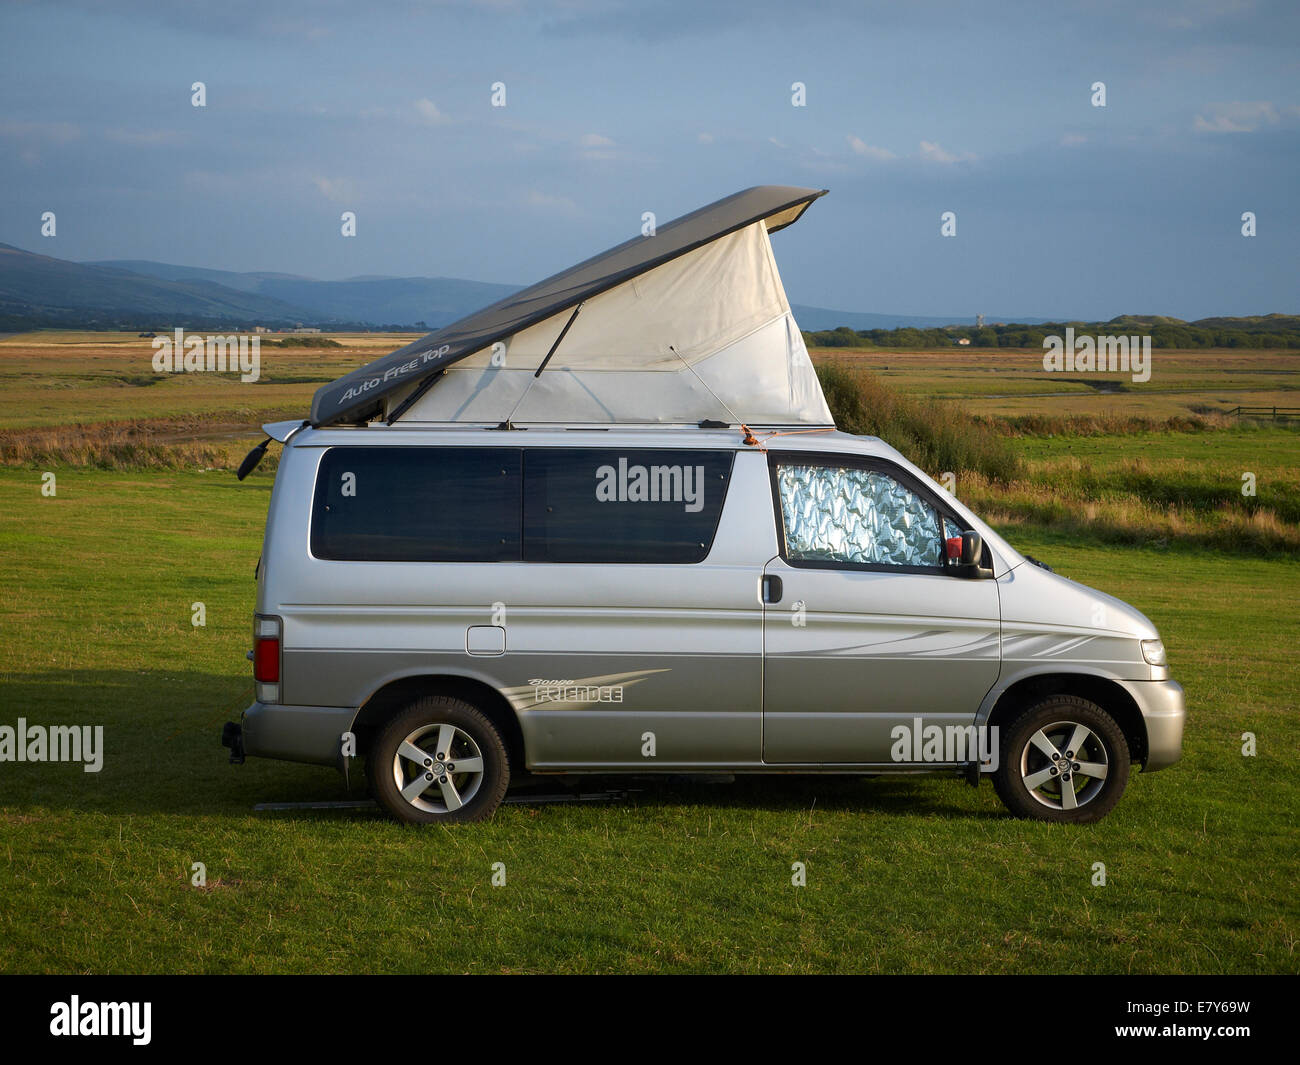 Mazda Bongo friendee camper van with raised roof Stock Photo - Alamy